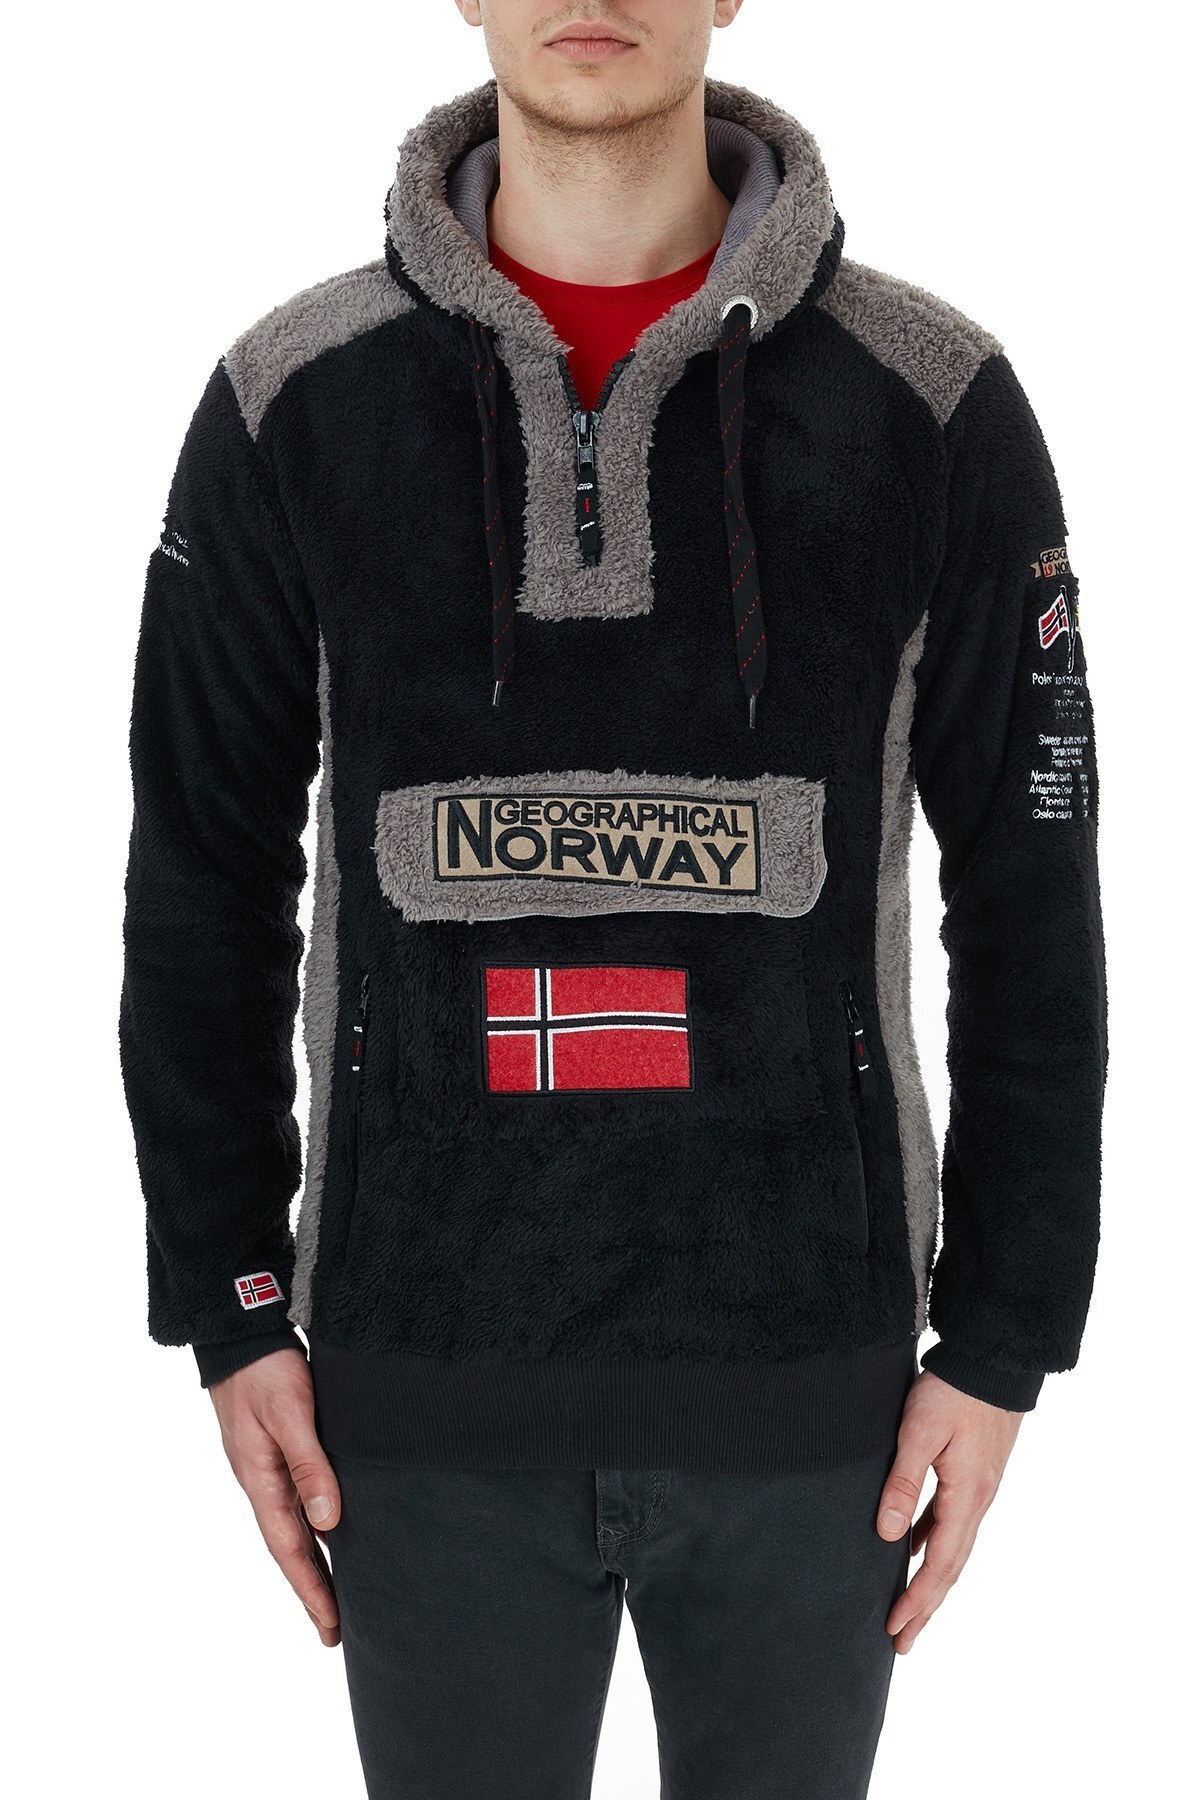 Norway Geographical Kapüşonlu Outdoor Polar Erkek Sweat GYMCLASS E SİYAH